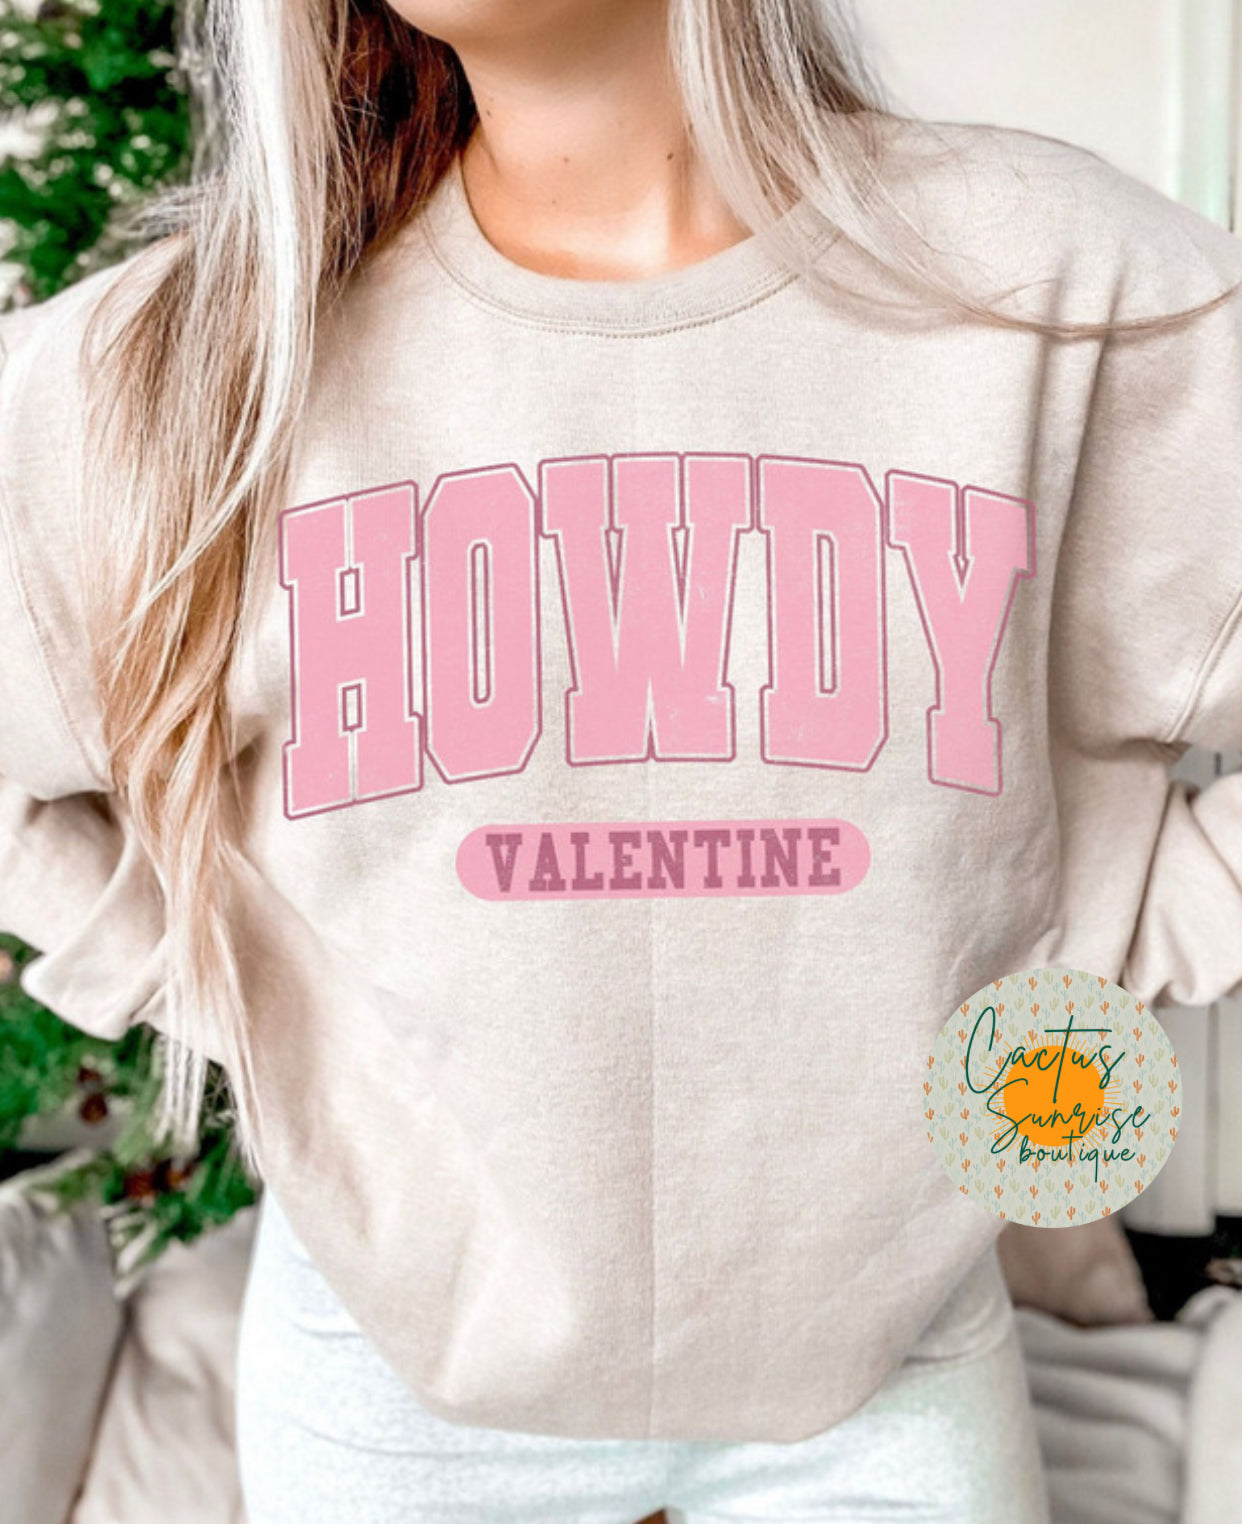 Howdy Valentine University -DTF Transfer